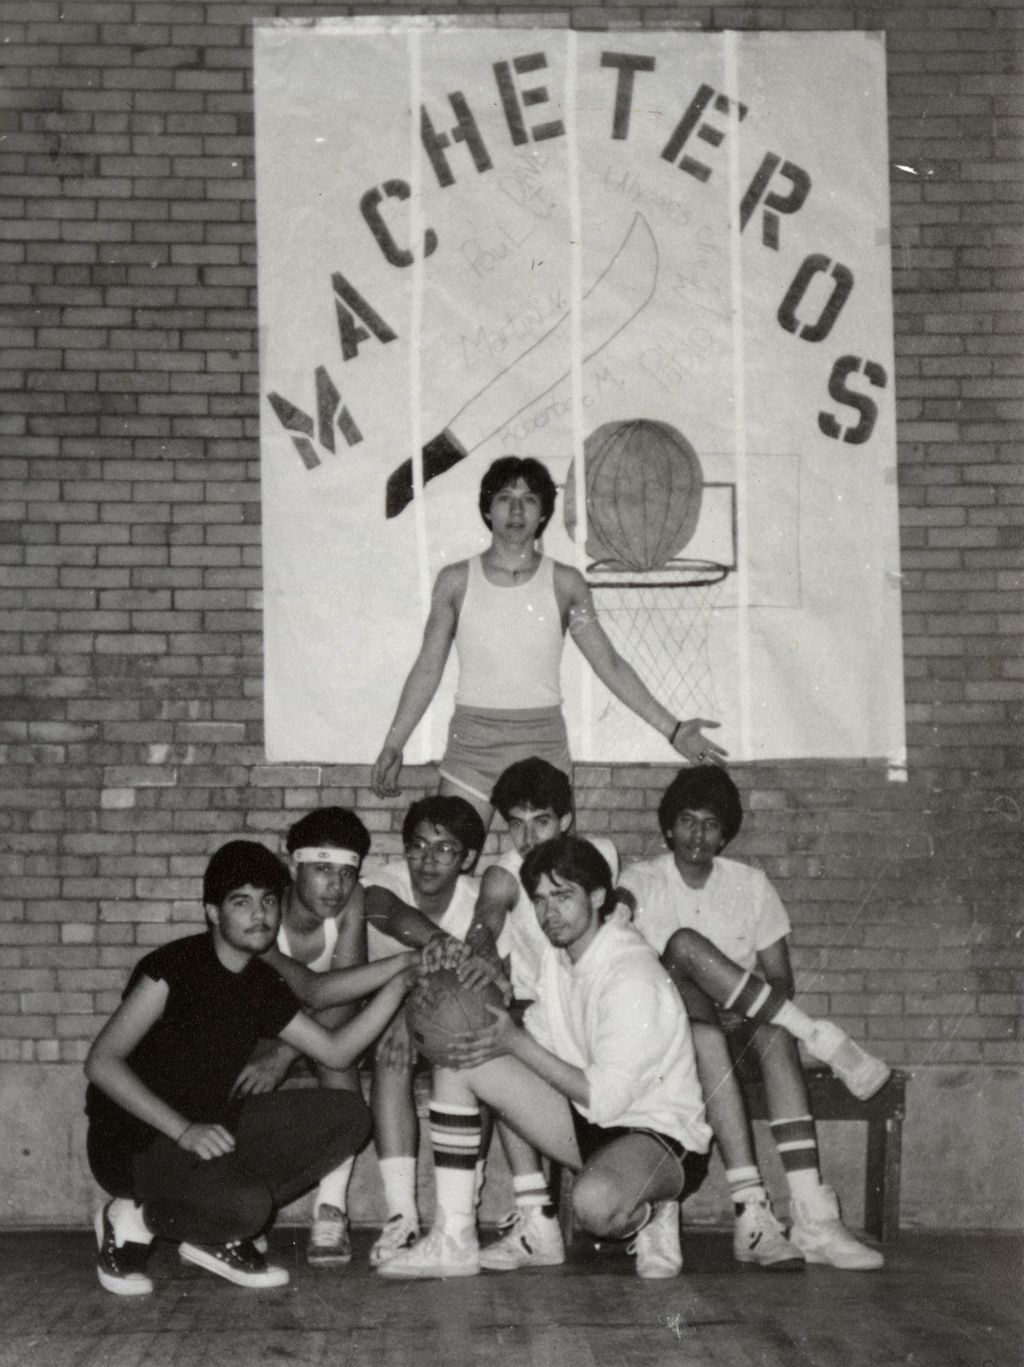 Miniature of Members of a basketball team